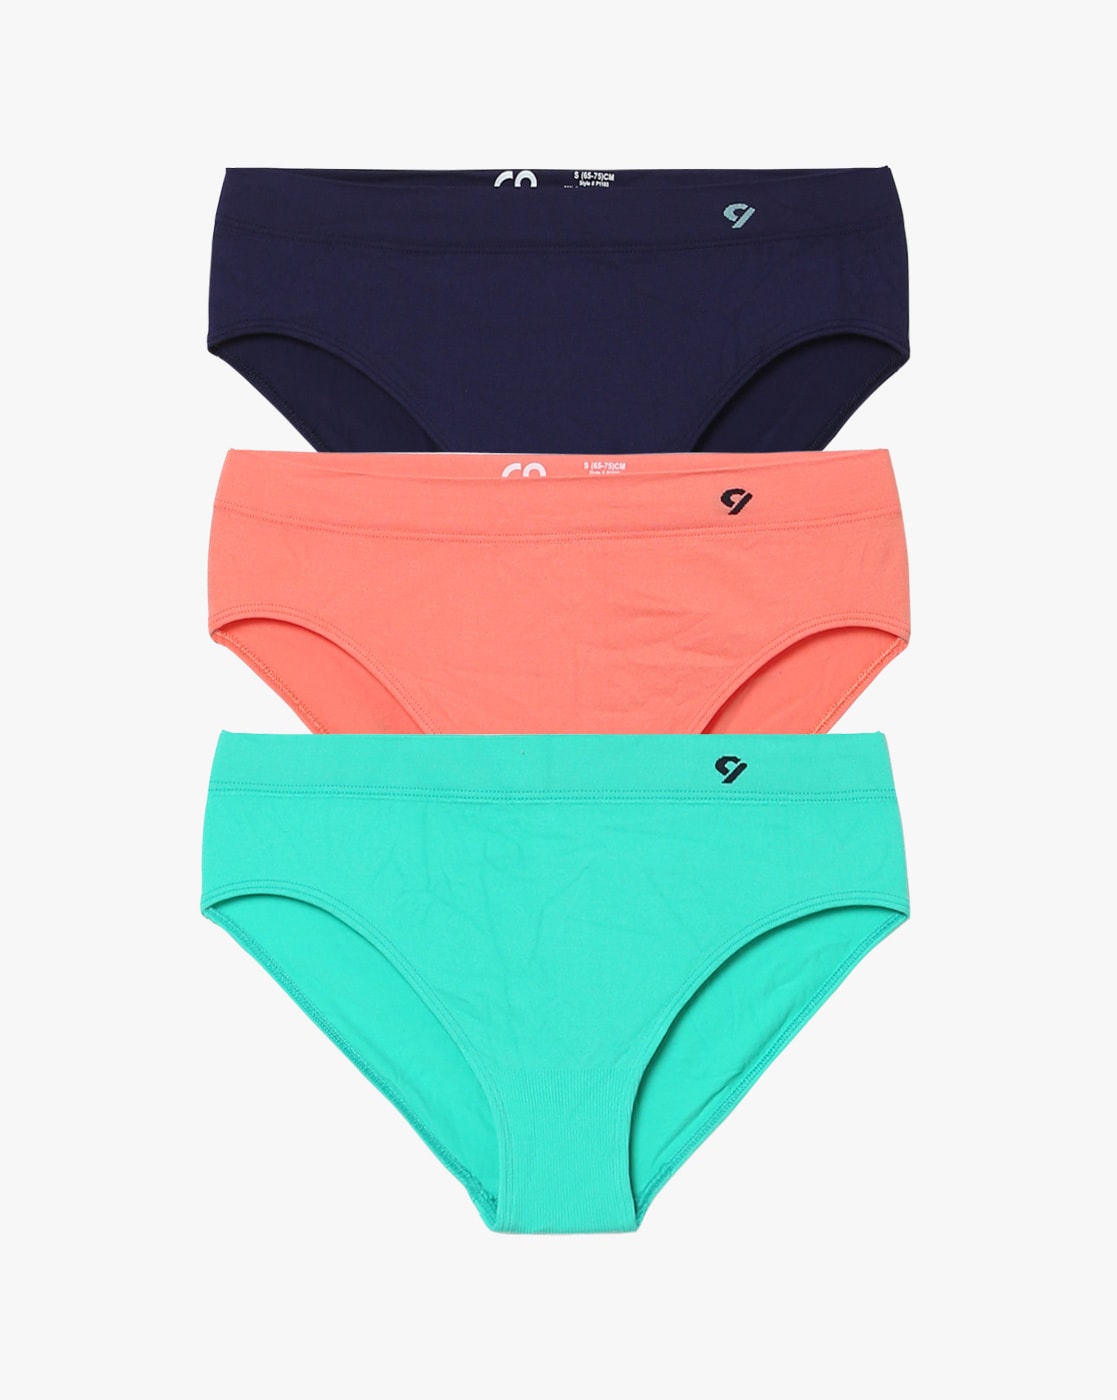 Panties for Women by C9 Airwear Online 